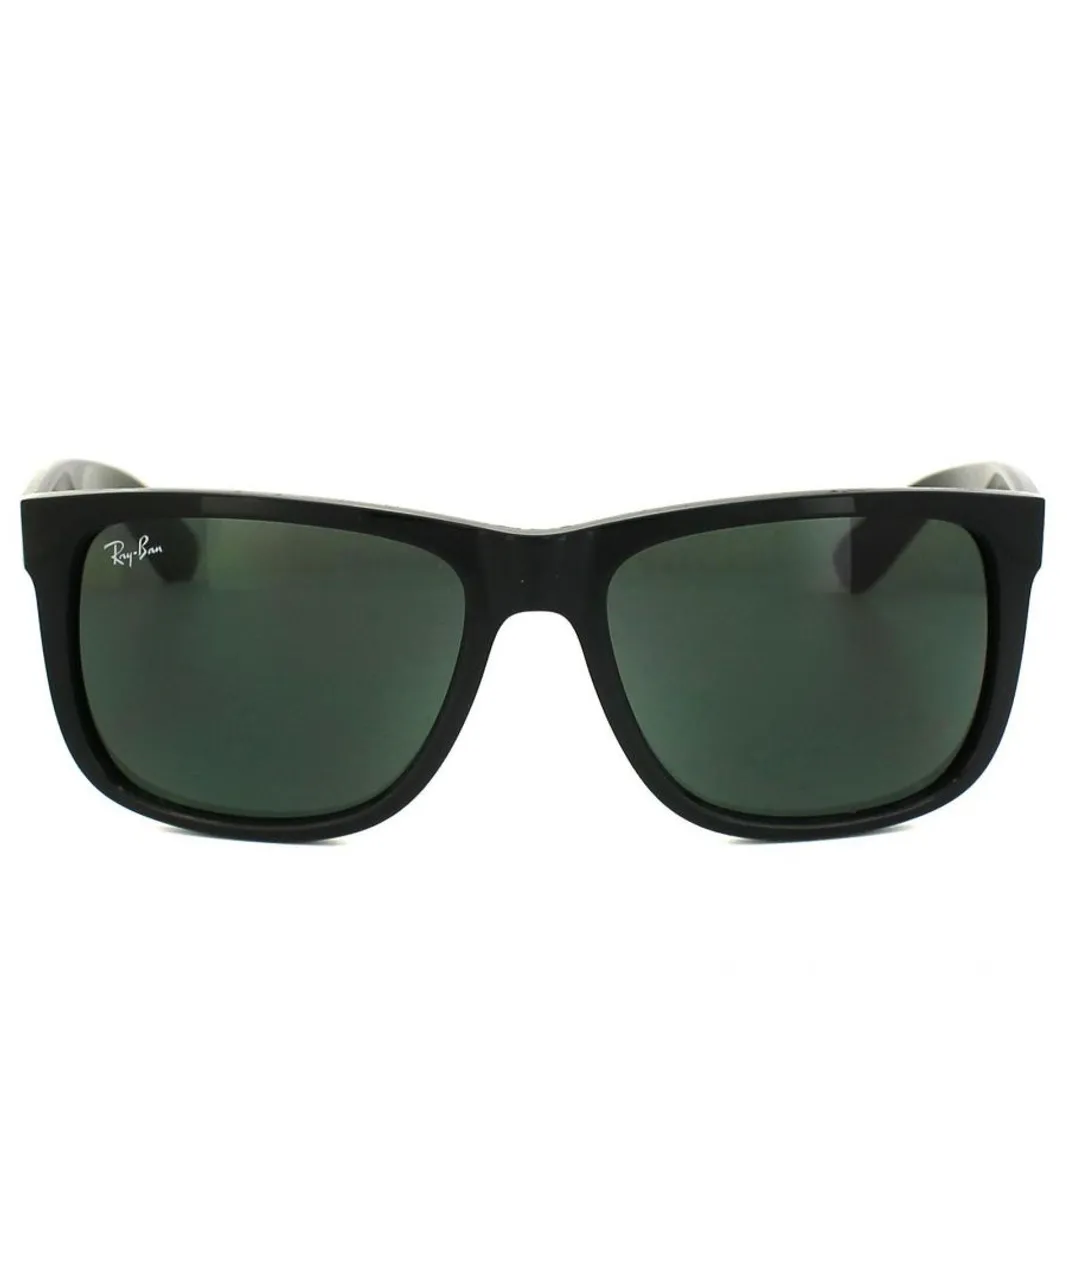 Ray-Ban Unisex Sunglasses Justin 4165 601/71 Shiny Black Green - One